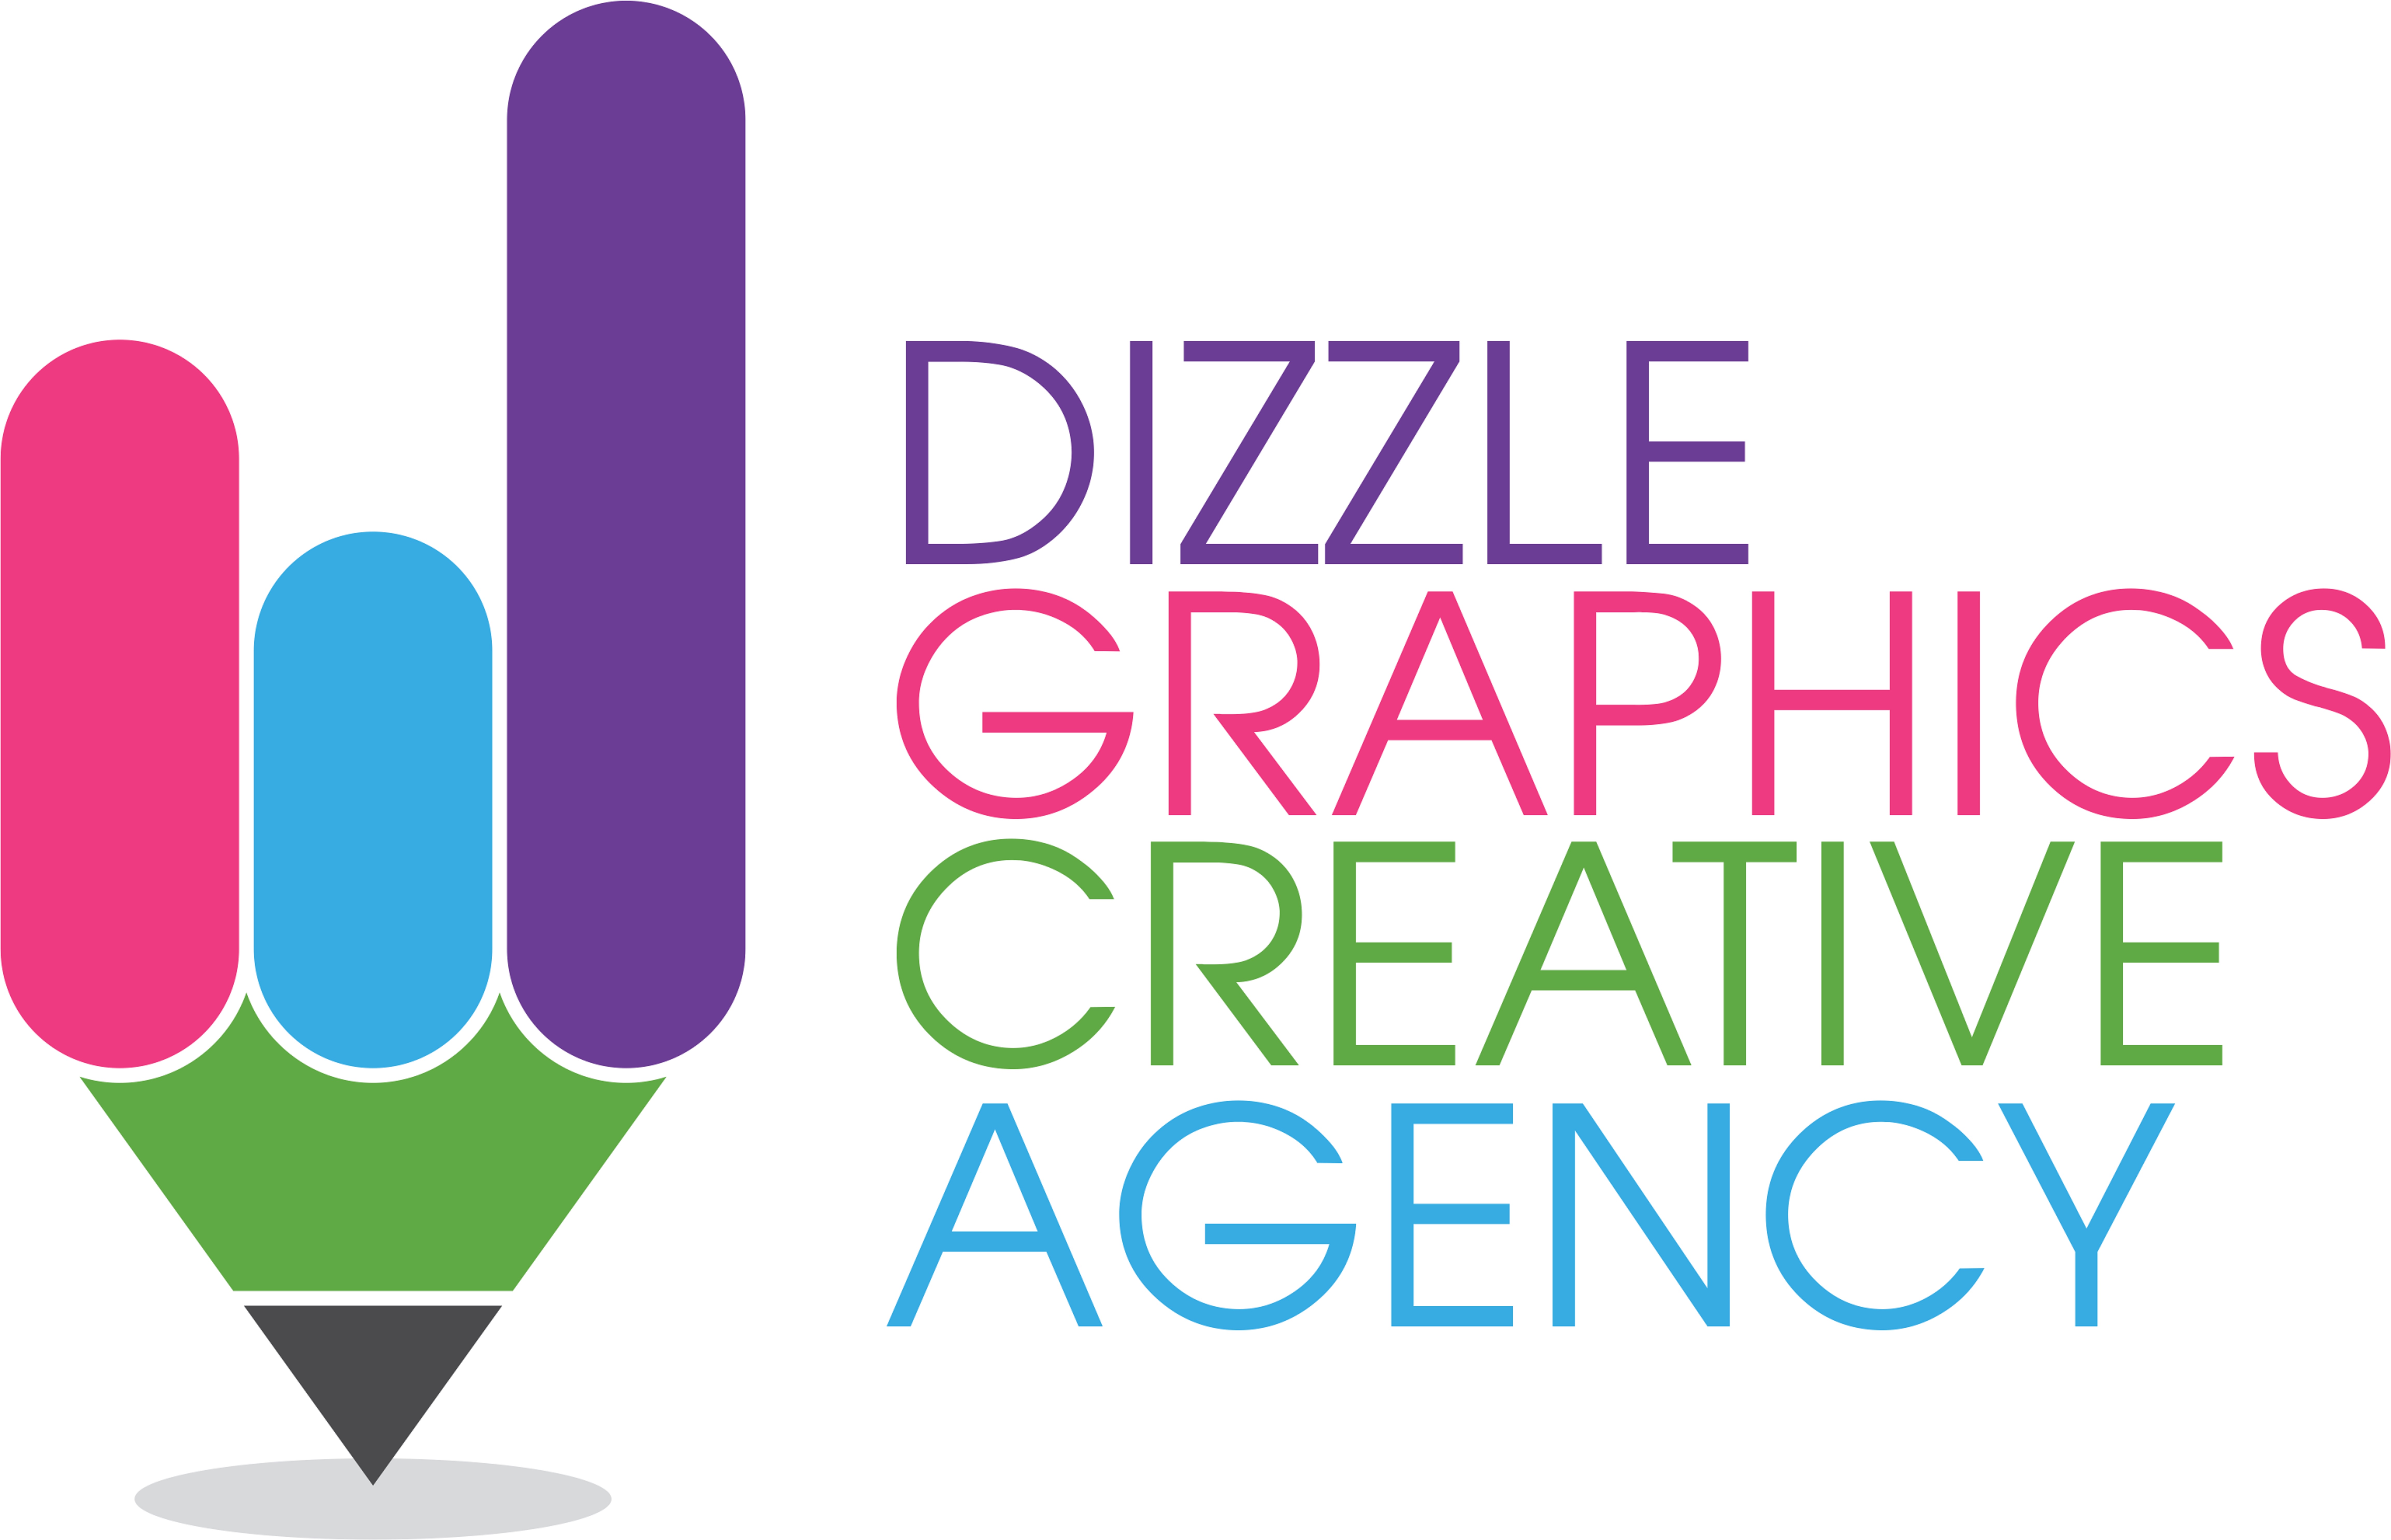 Dizzle Graphics Creative Agency, LLC